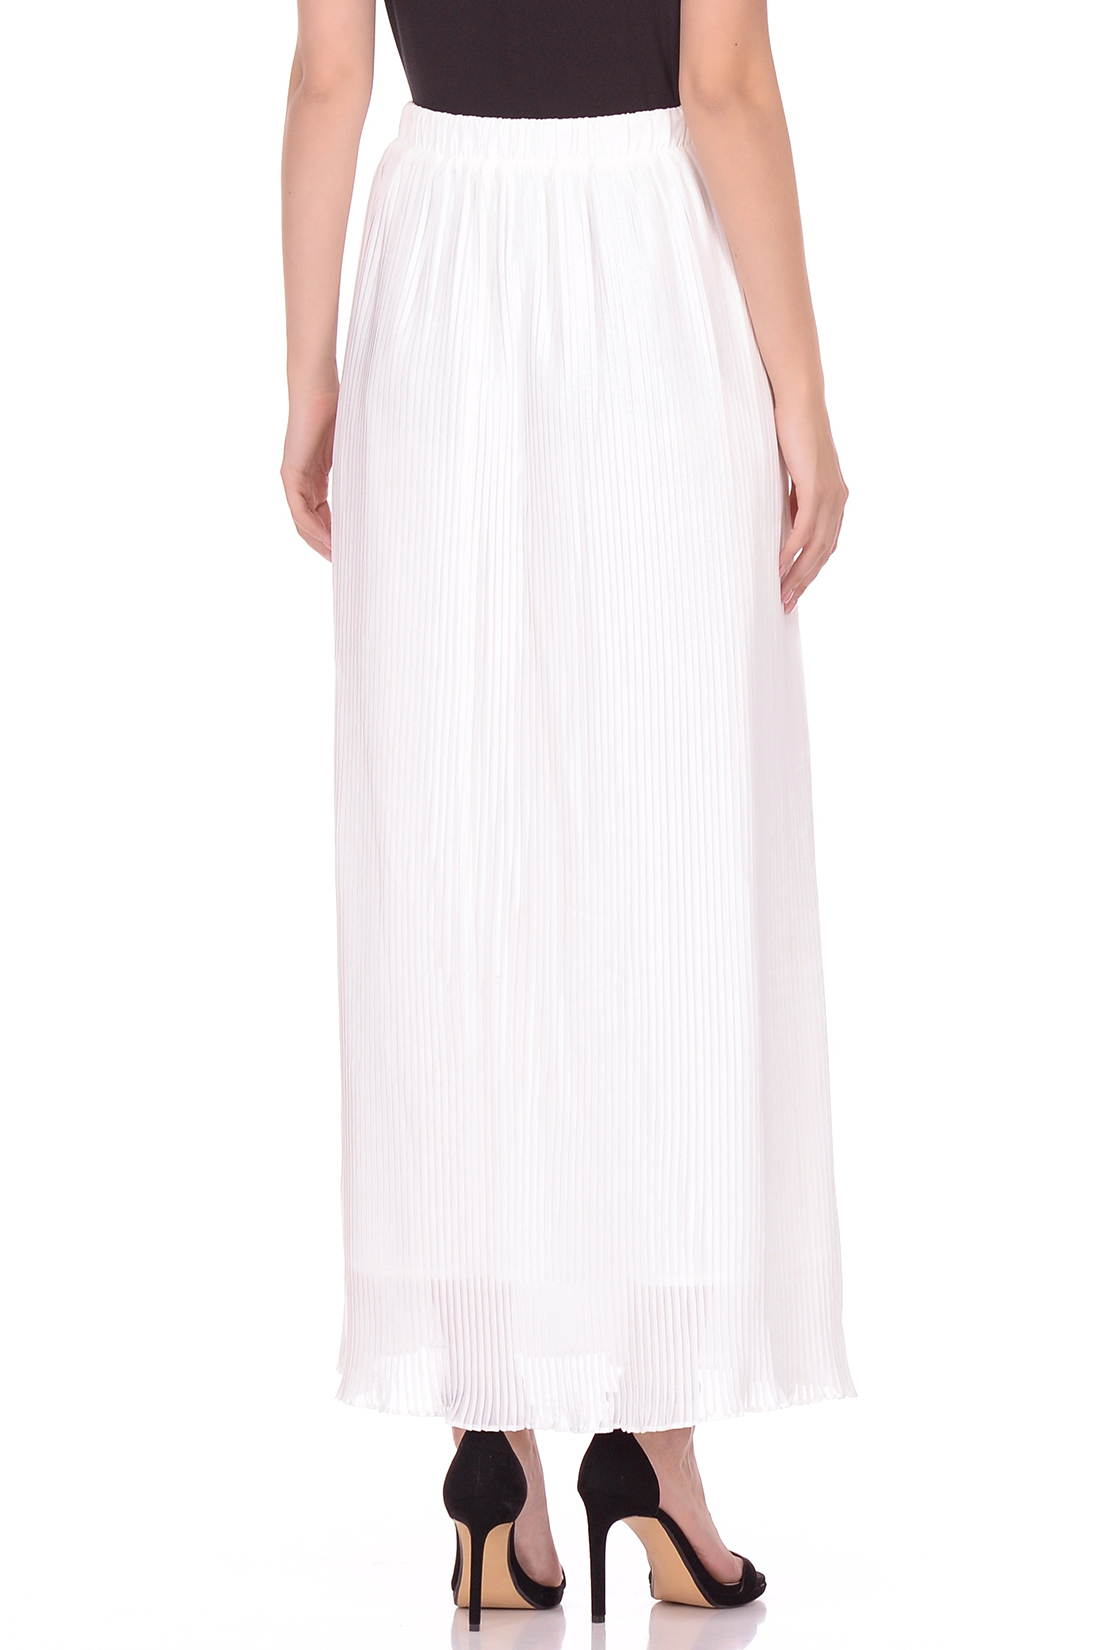 Длинная юбка-гофре (арт. baon B478036), размер XS, цвет белый Длинная юбка-гофре (арт. baon B478036) - фото 2